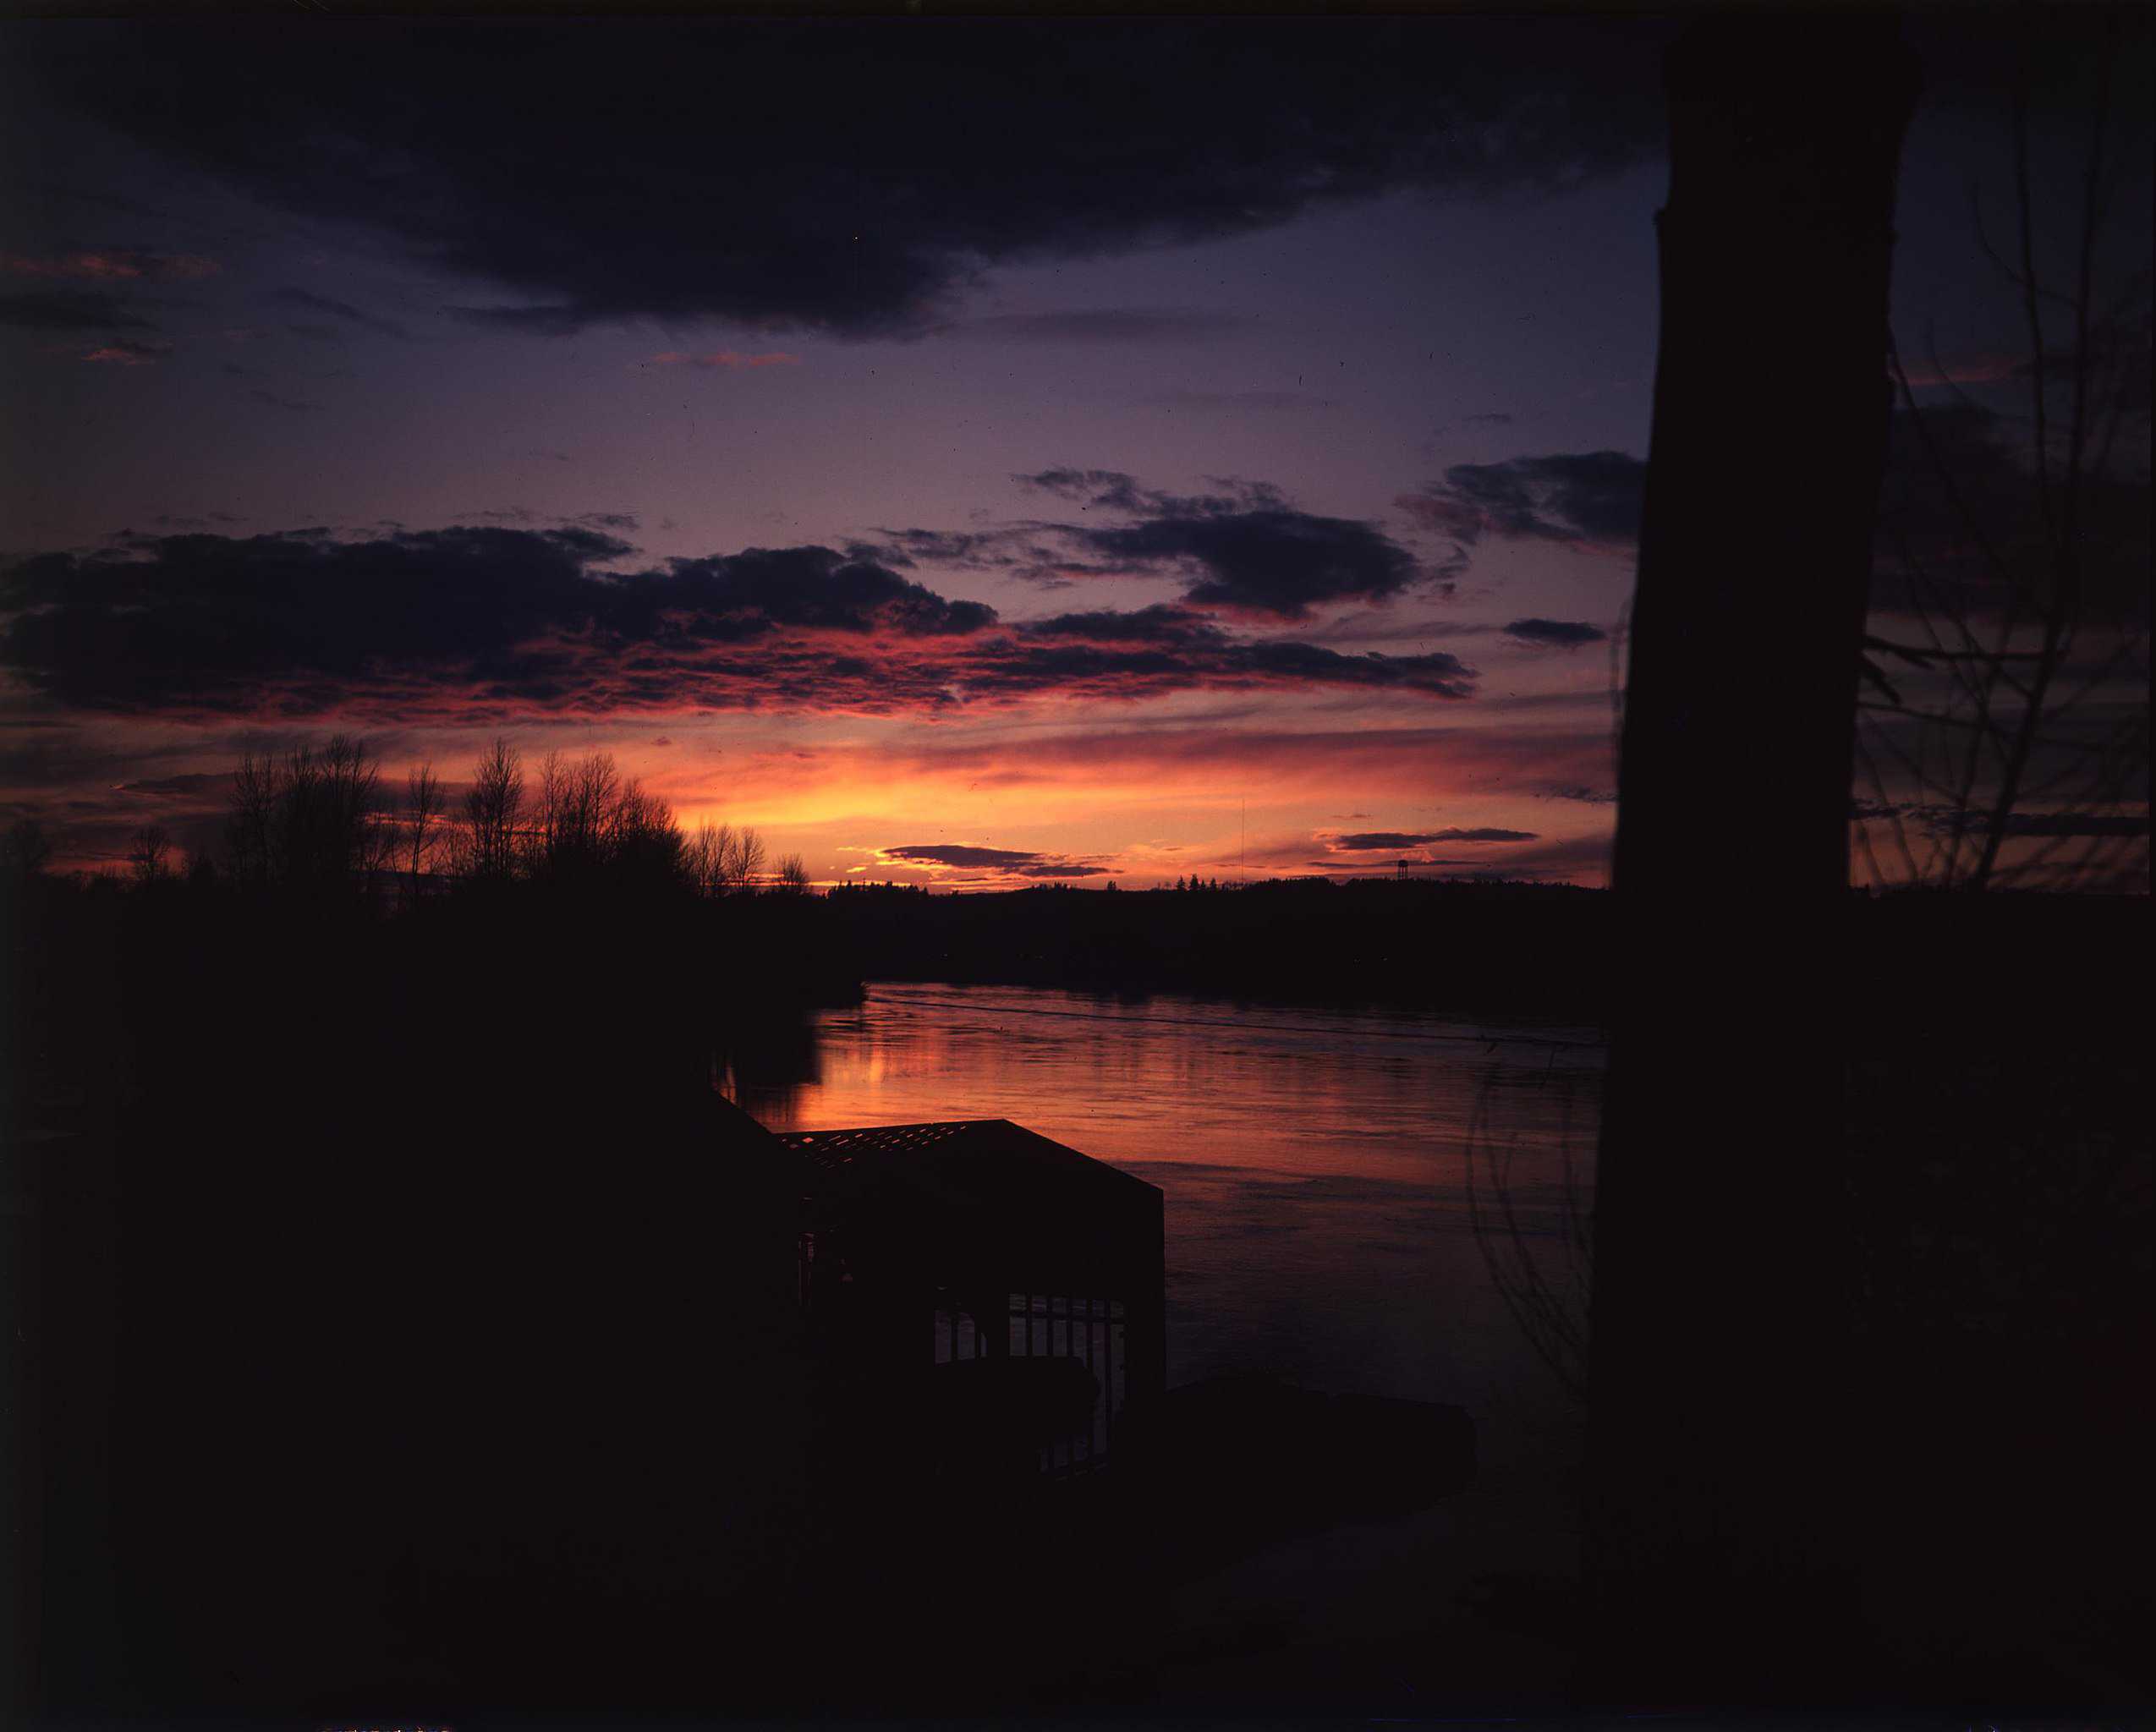 Winter sunset on the Willamette River, Oregon